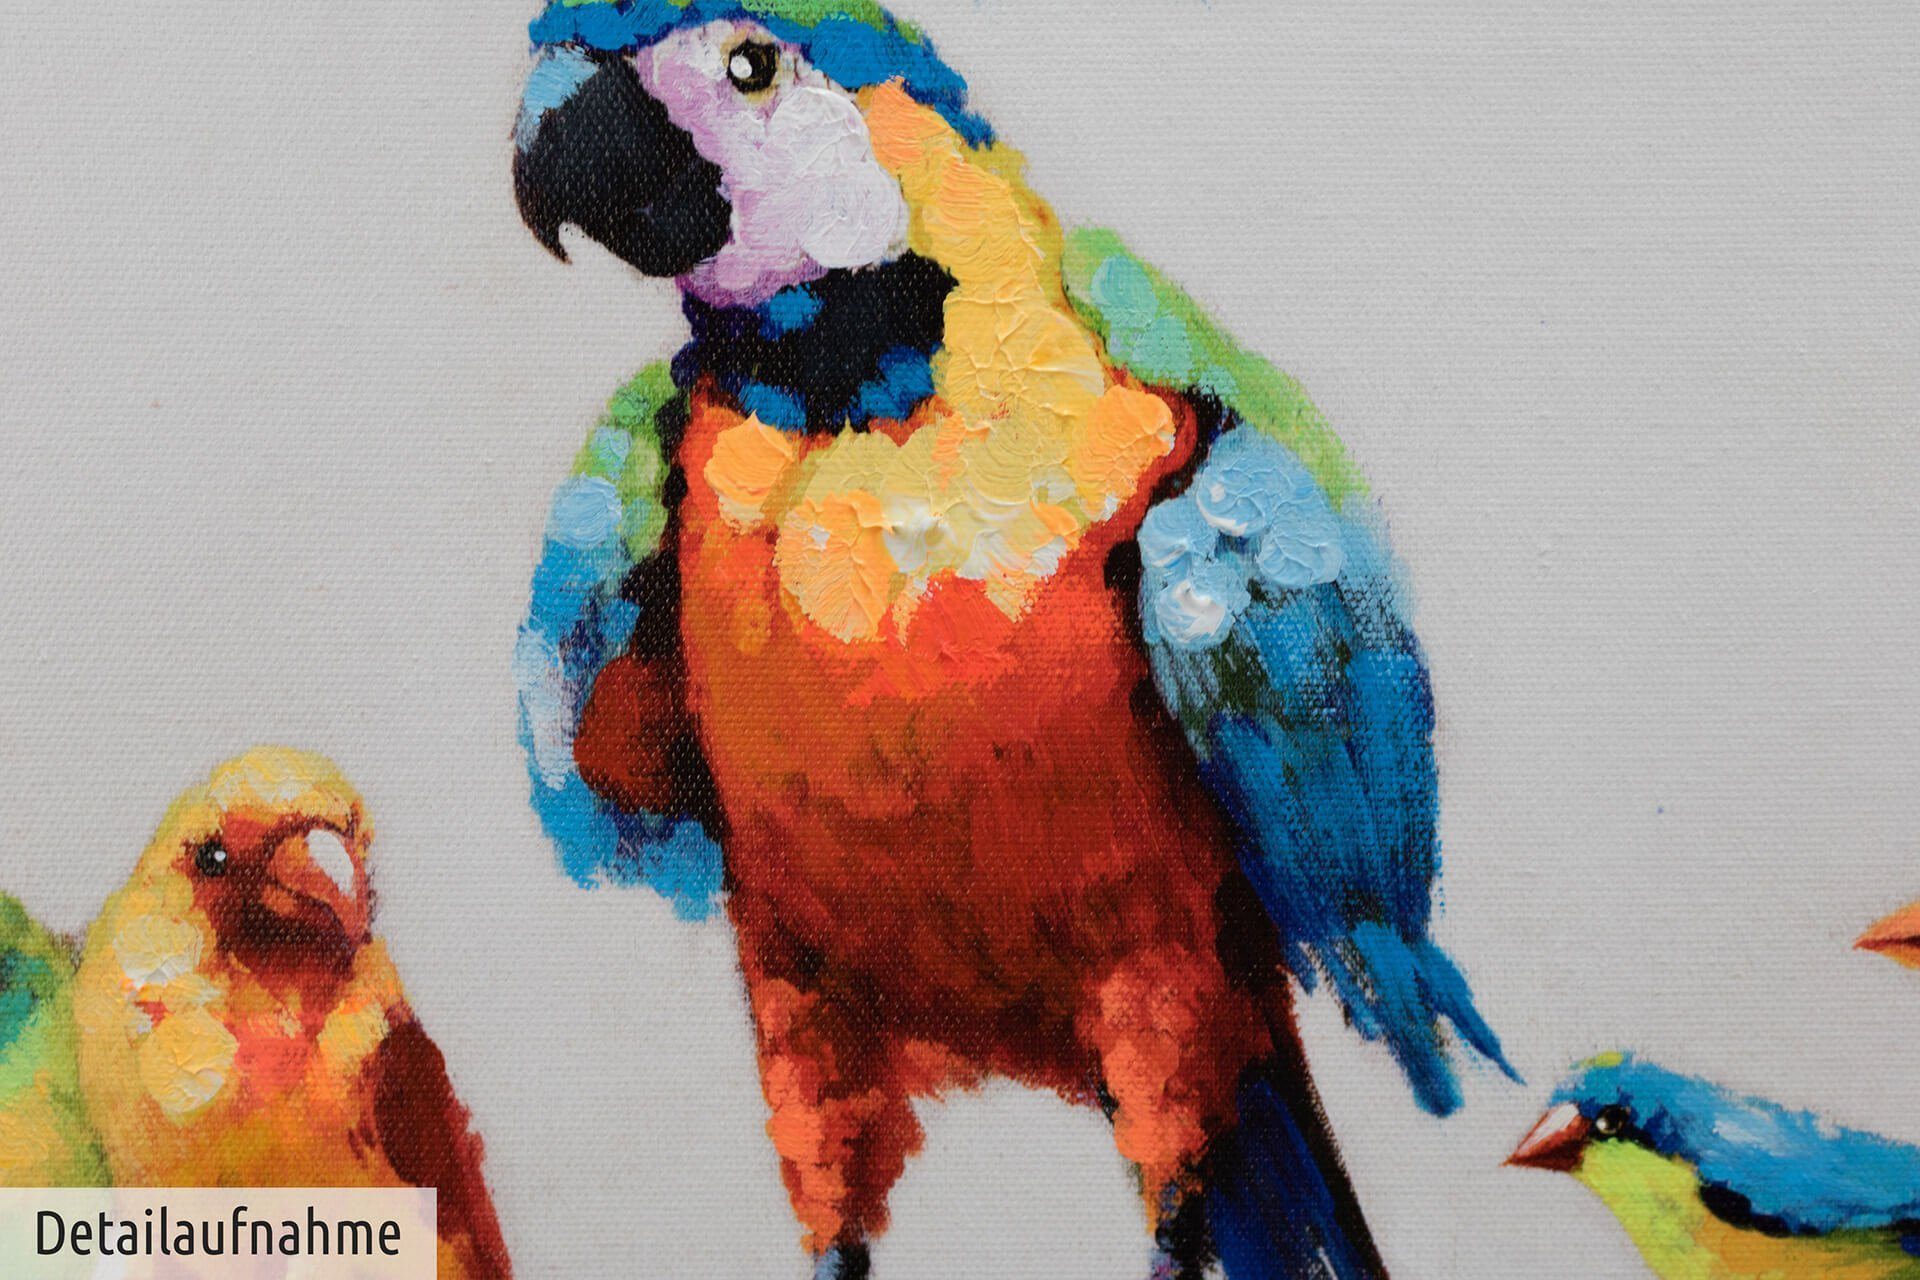 cm, KUNSTLOFT Wandbild HANDGEMALT Leinwandbild Paradiesvögel 100% 150x30 Wohnzimmer Gemälde